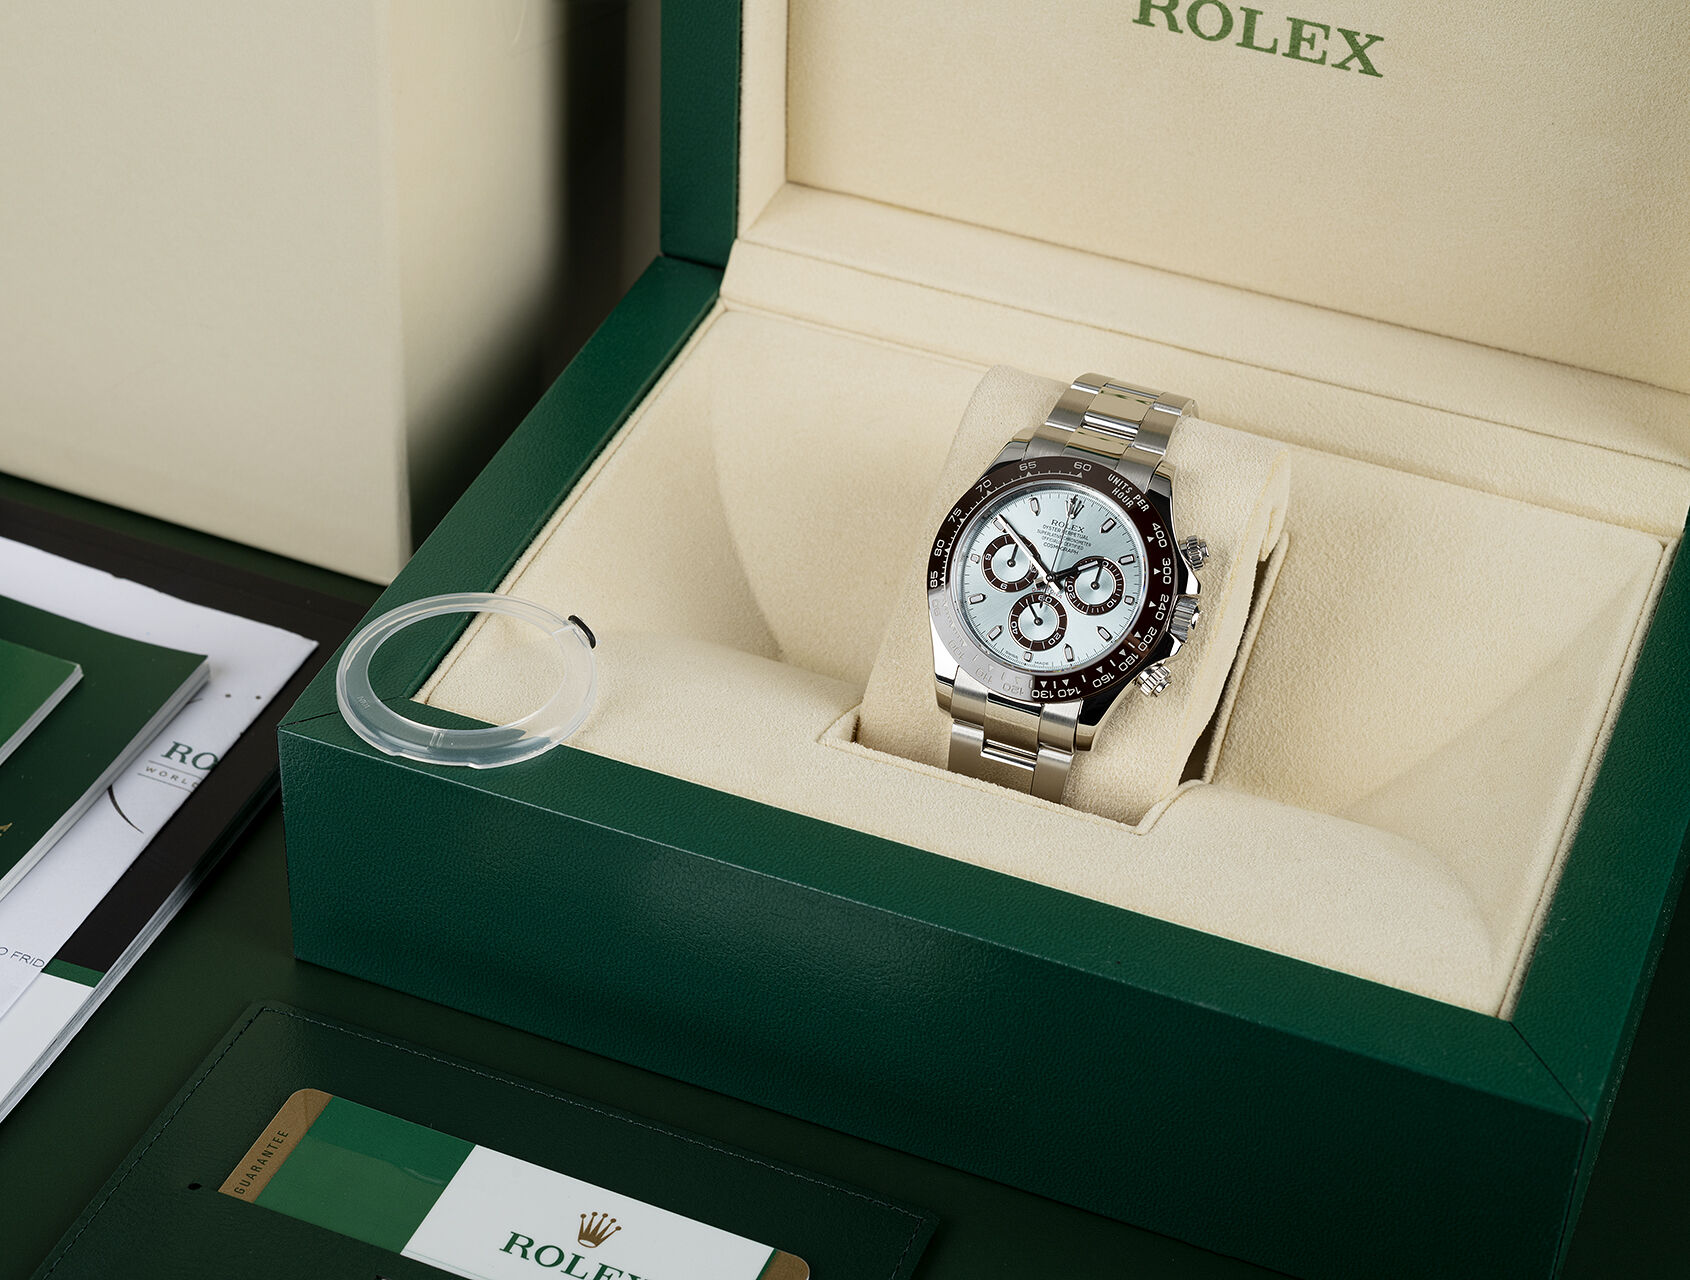 ref 116506 | 116506 - Box & Certificate | Rolex Cosmograph Daytona